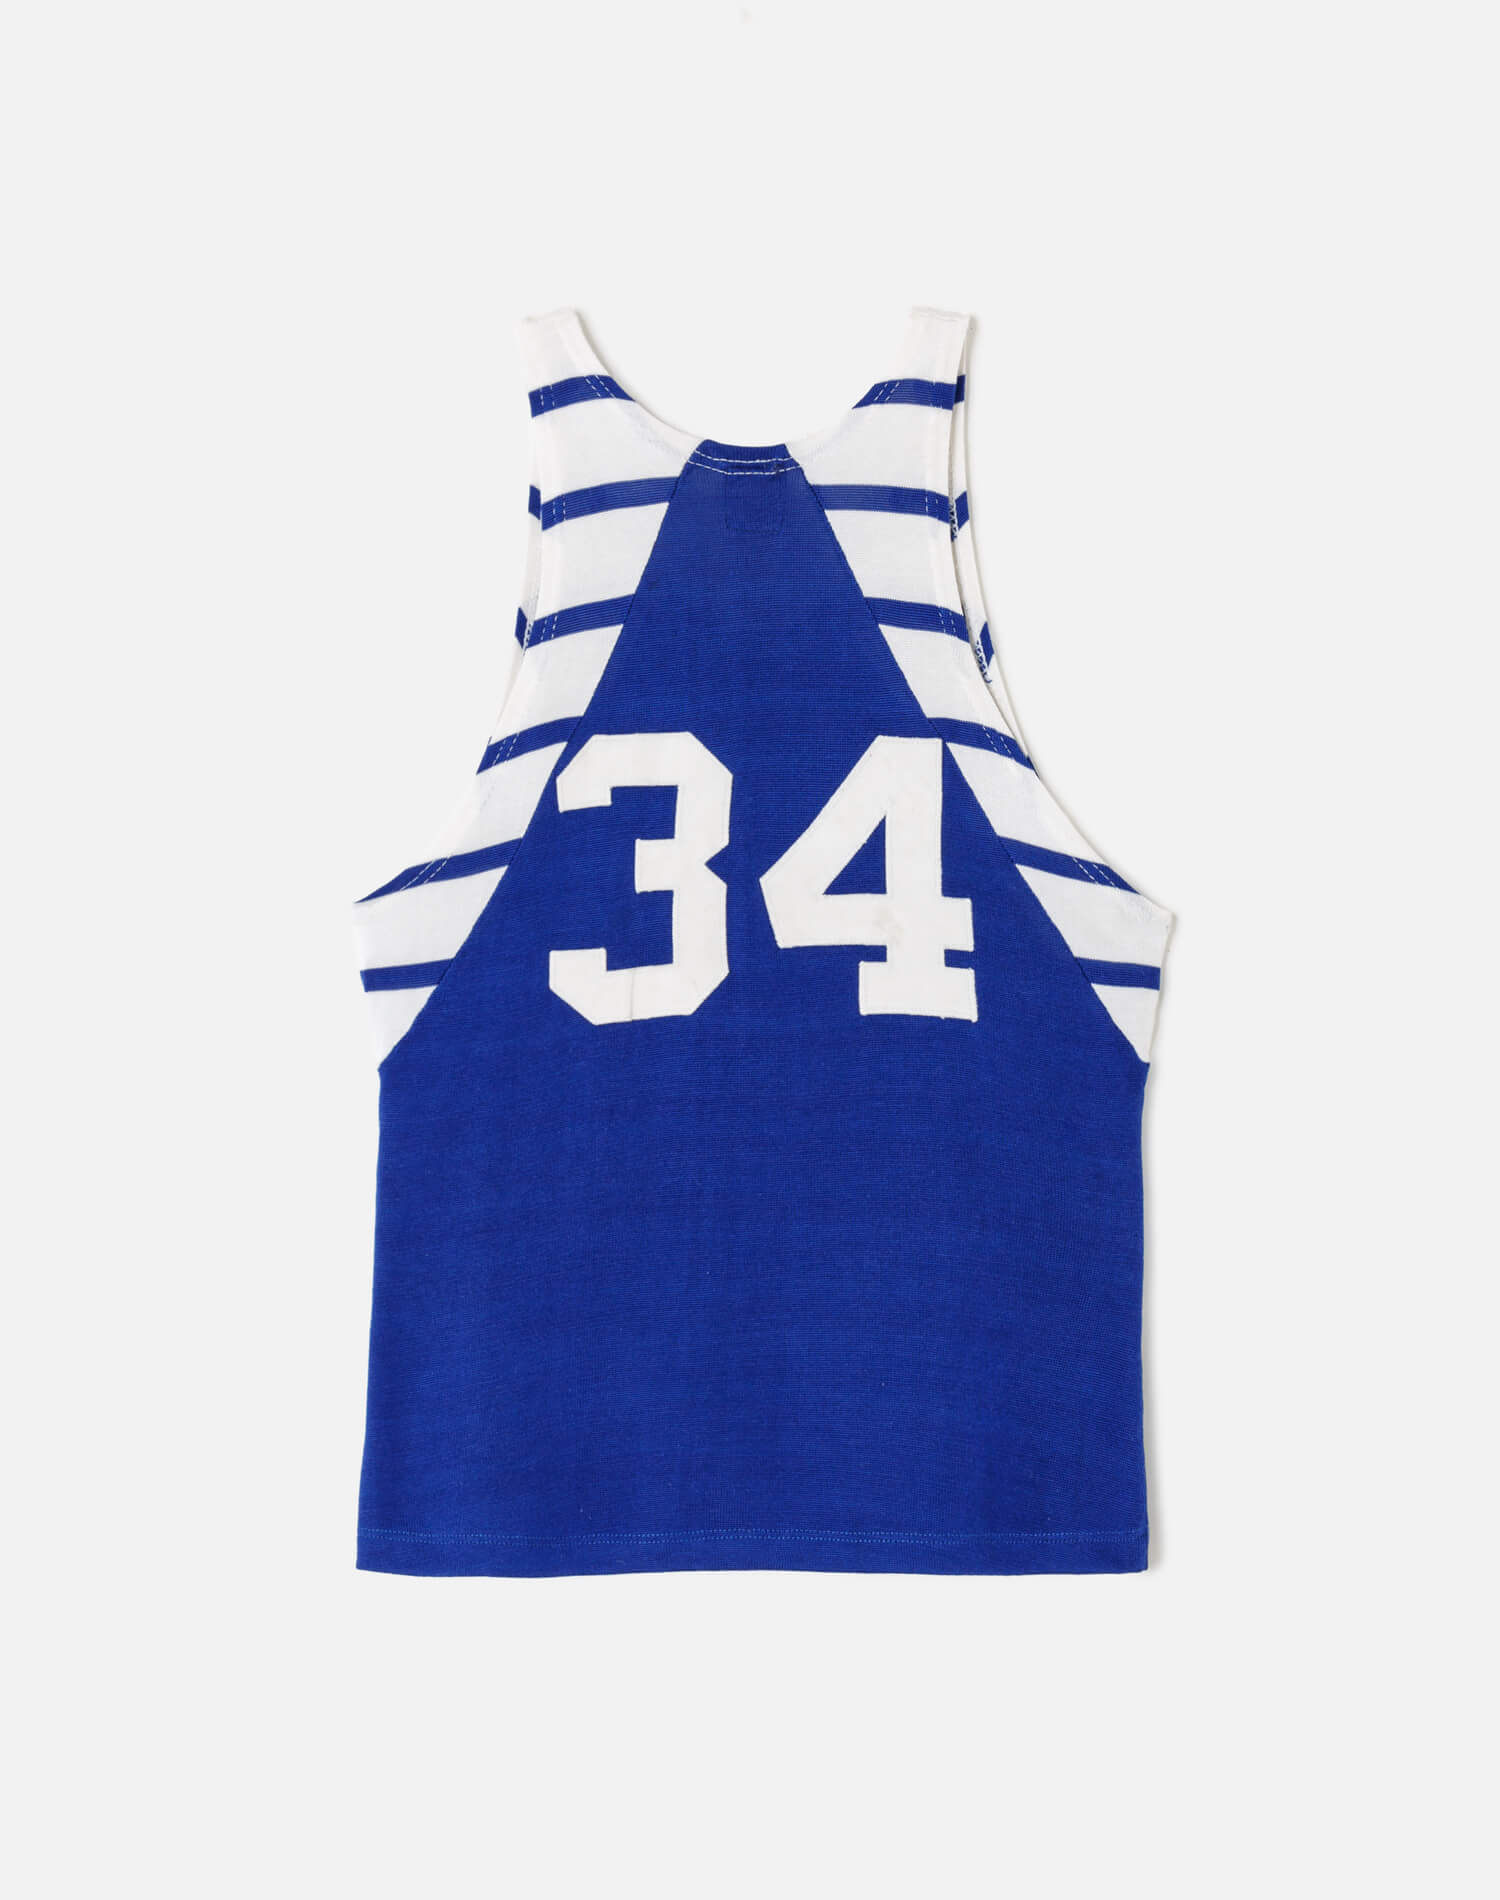 60s Basketball Jersey